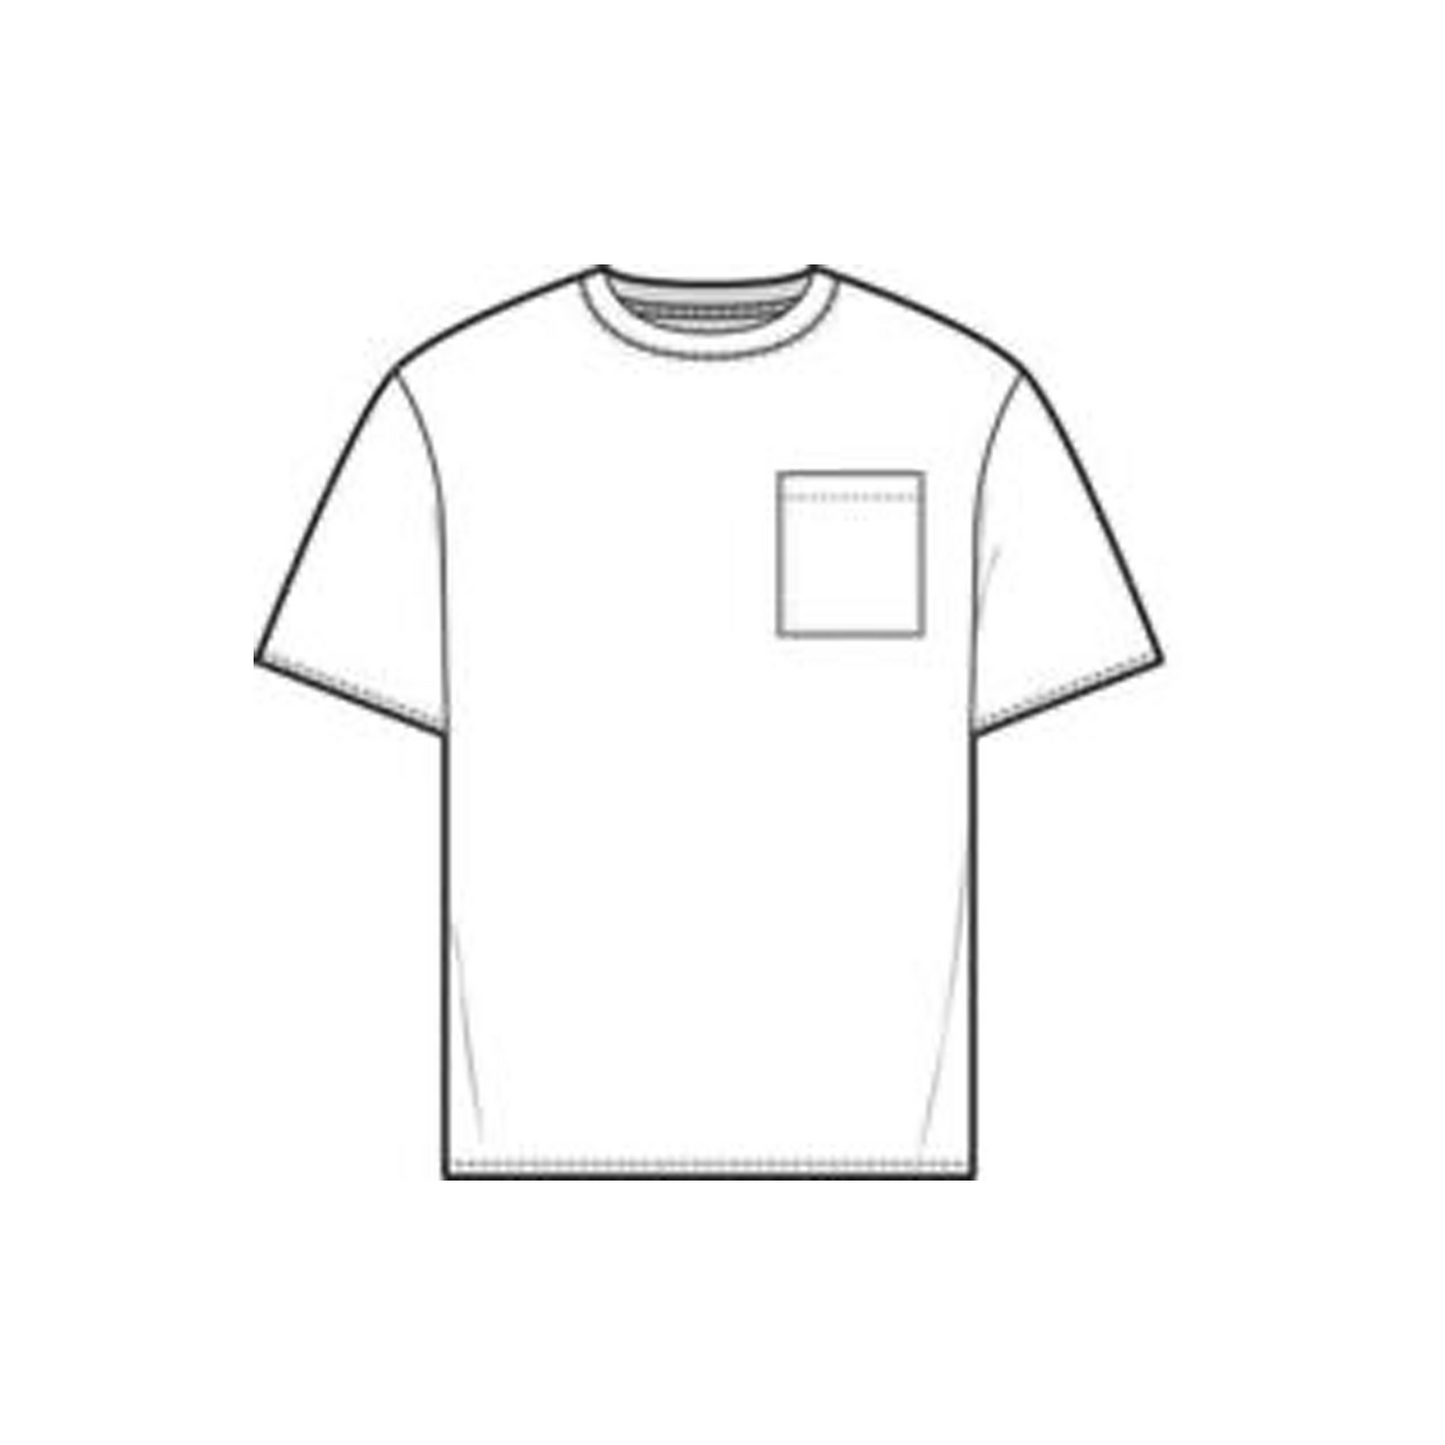 Pubkey x TFTC Beach Club T-Shirt with Pubkey Cigarette Pin Combo